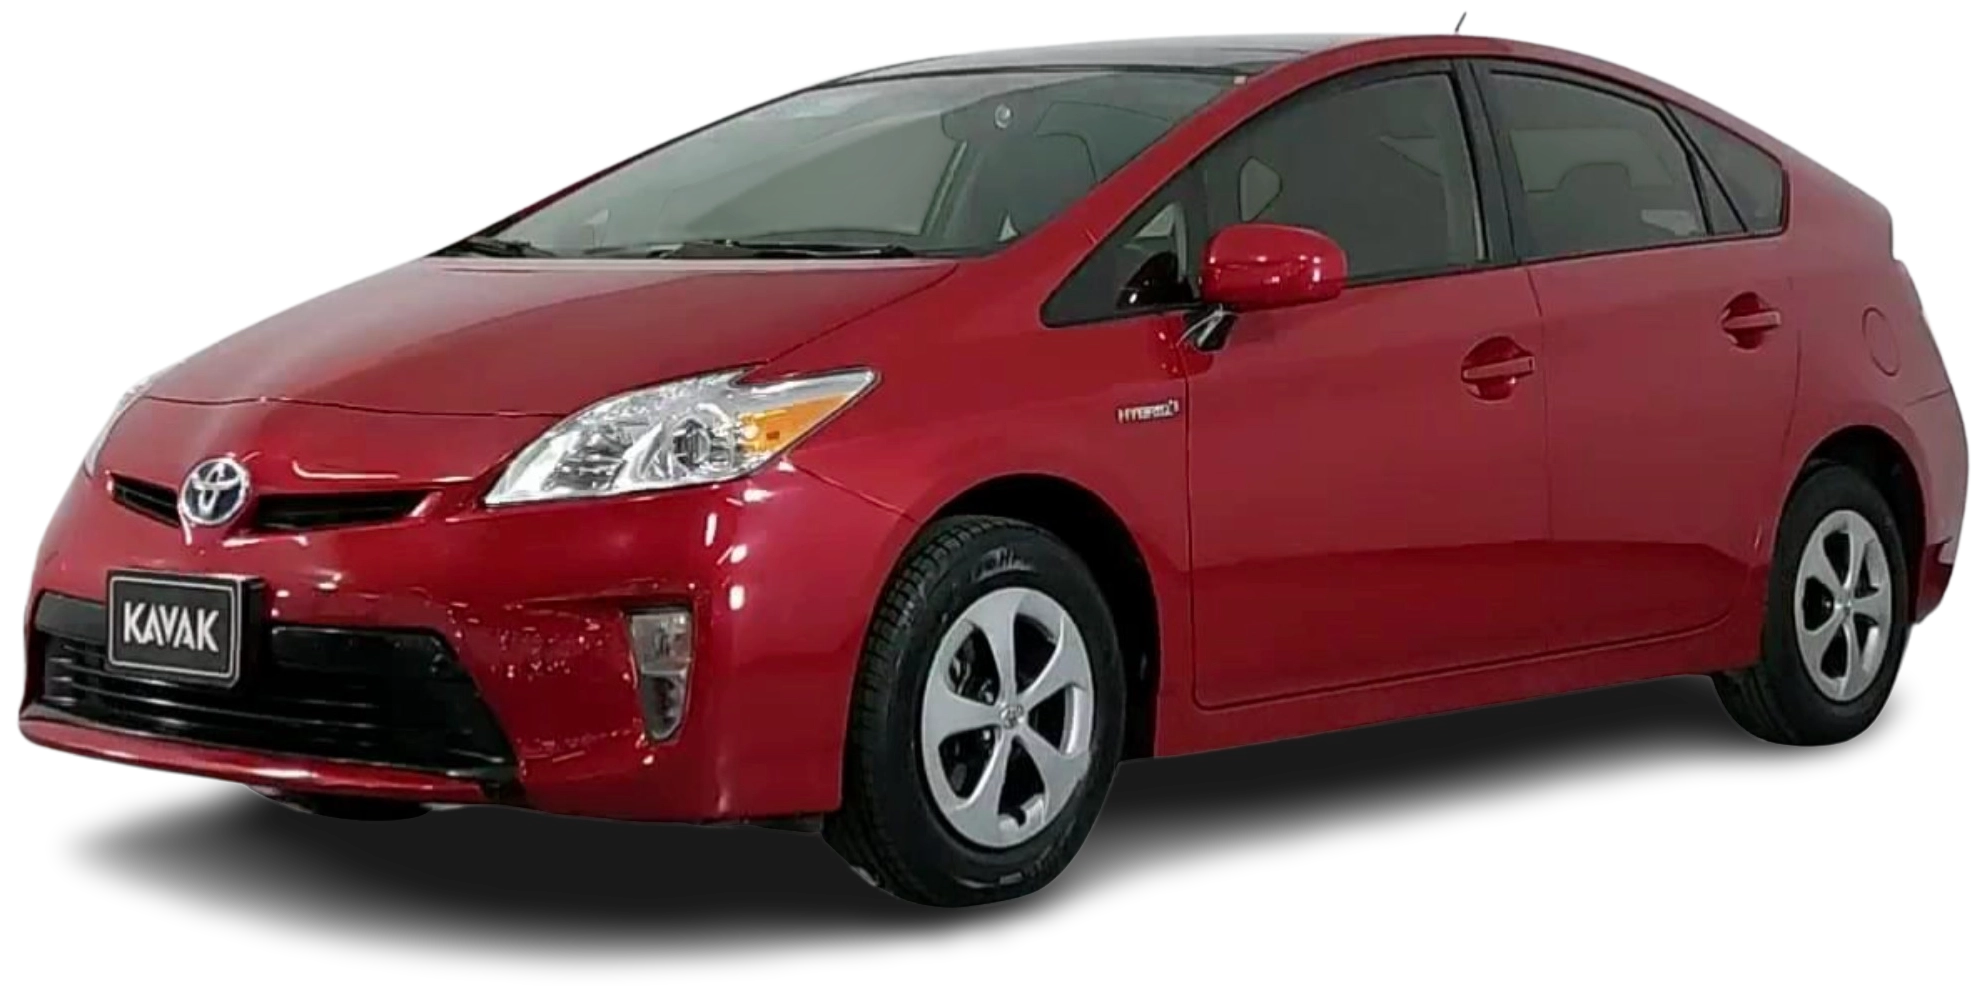 Toyota Prius Hatchback 2015 2014 2013 2012 2011 2010